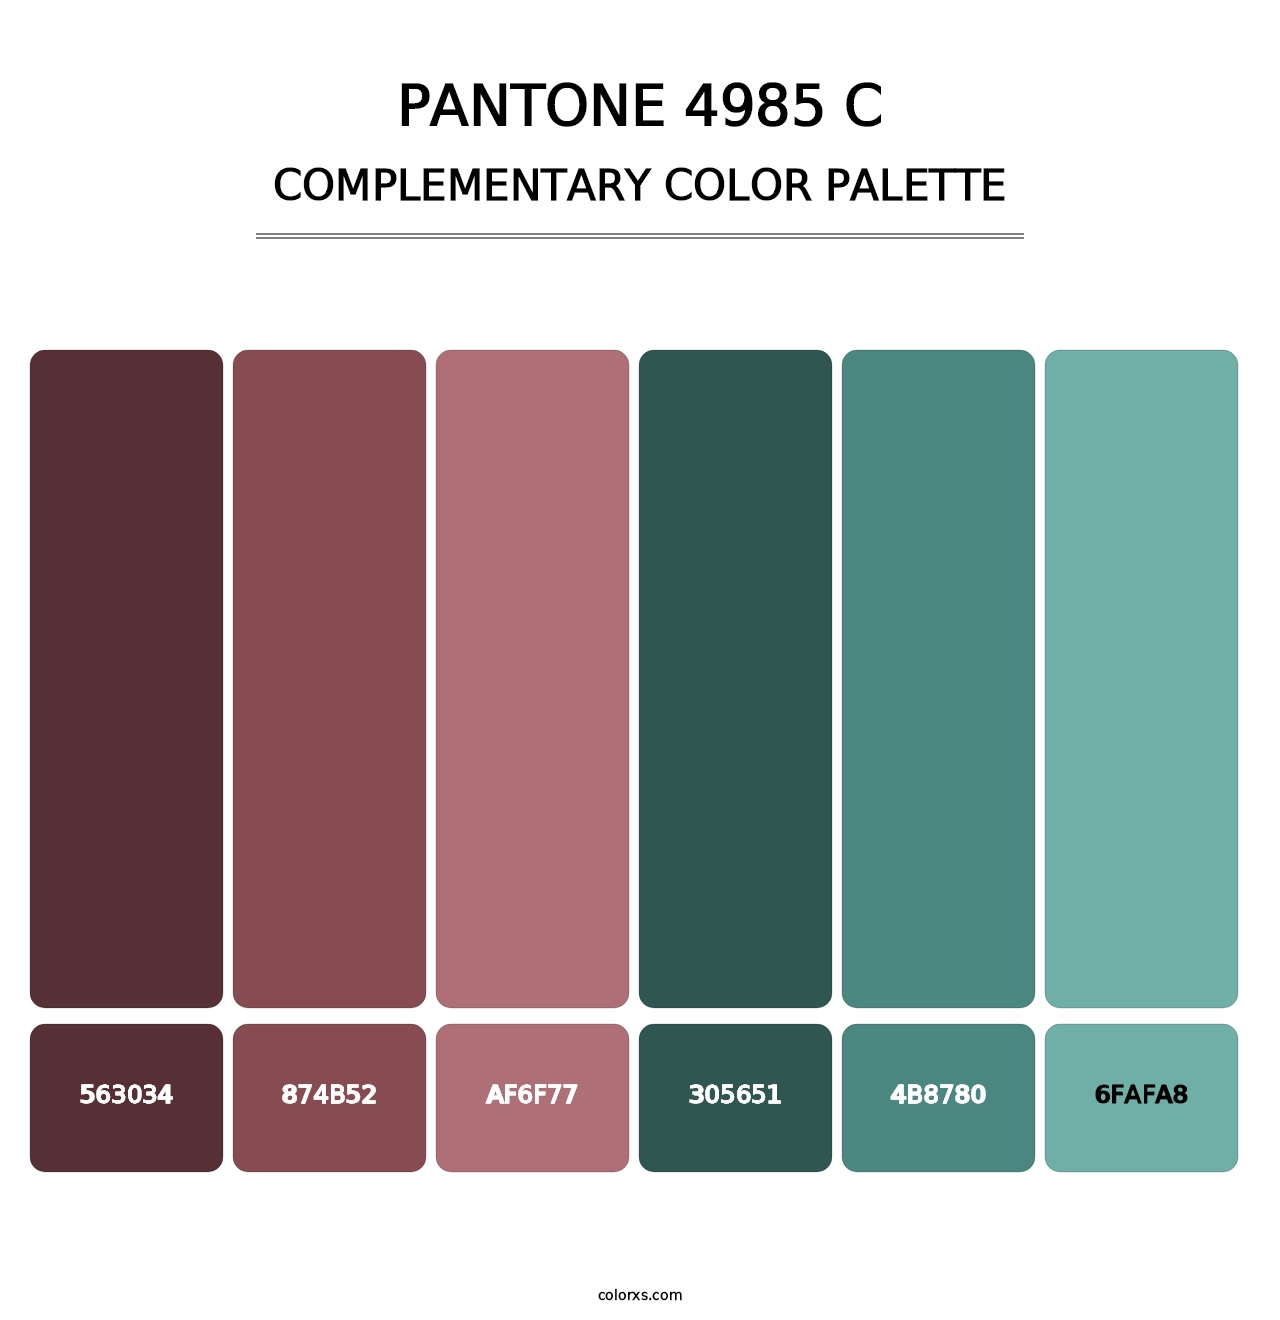 PANTONE 4985 C - Complementary Color Palette